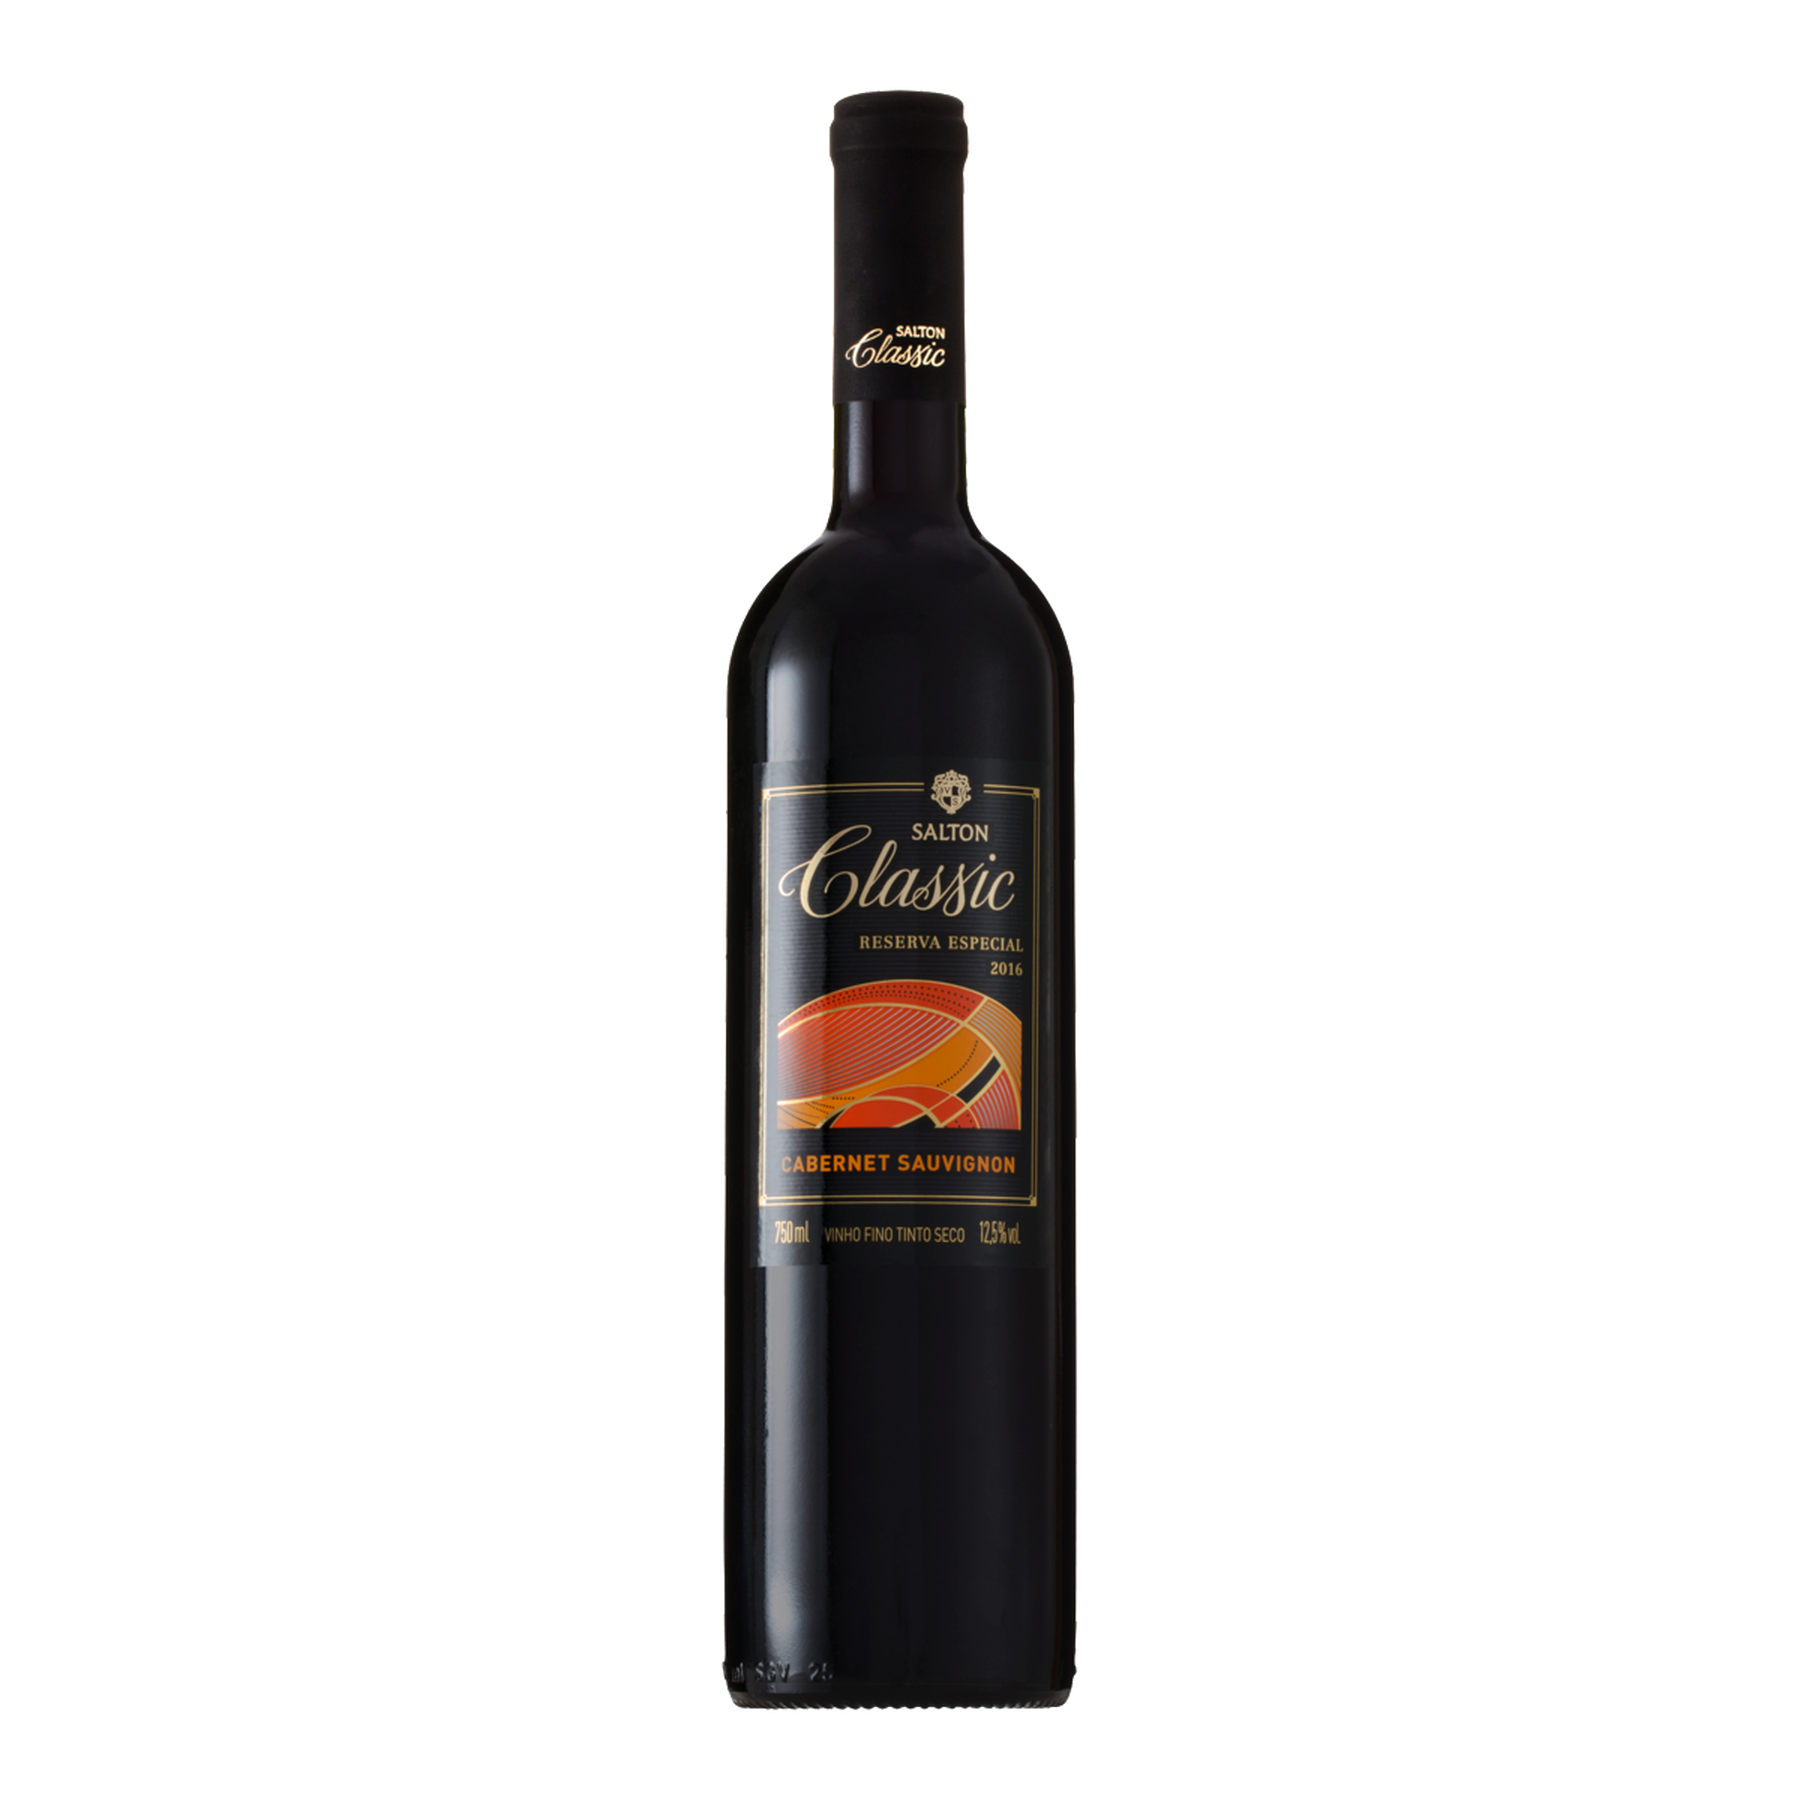 Vinho Tinto Cabernet Salton Classic Garrafa 750ml